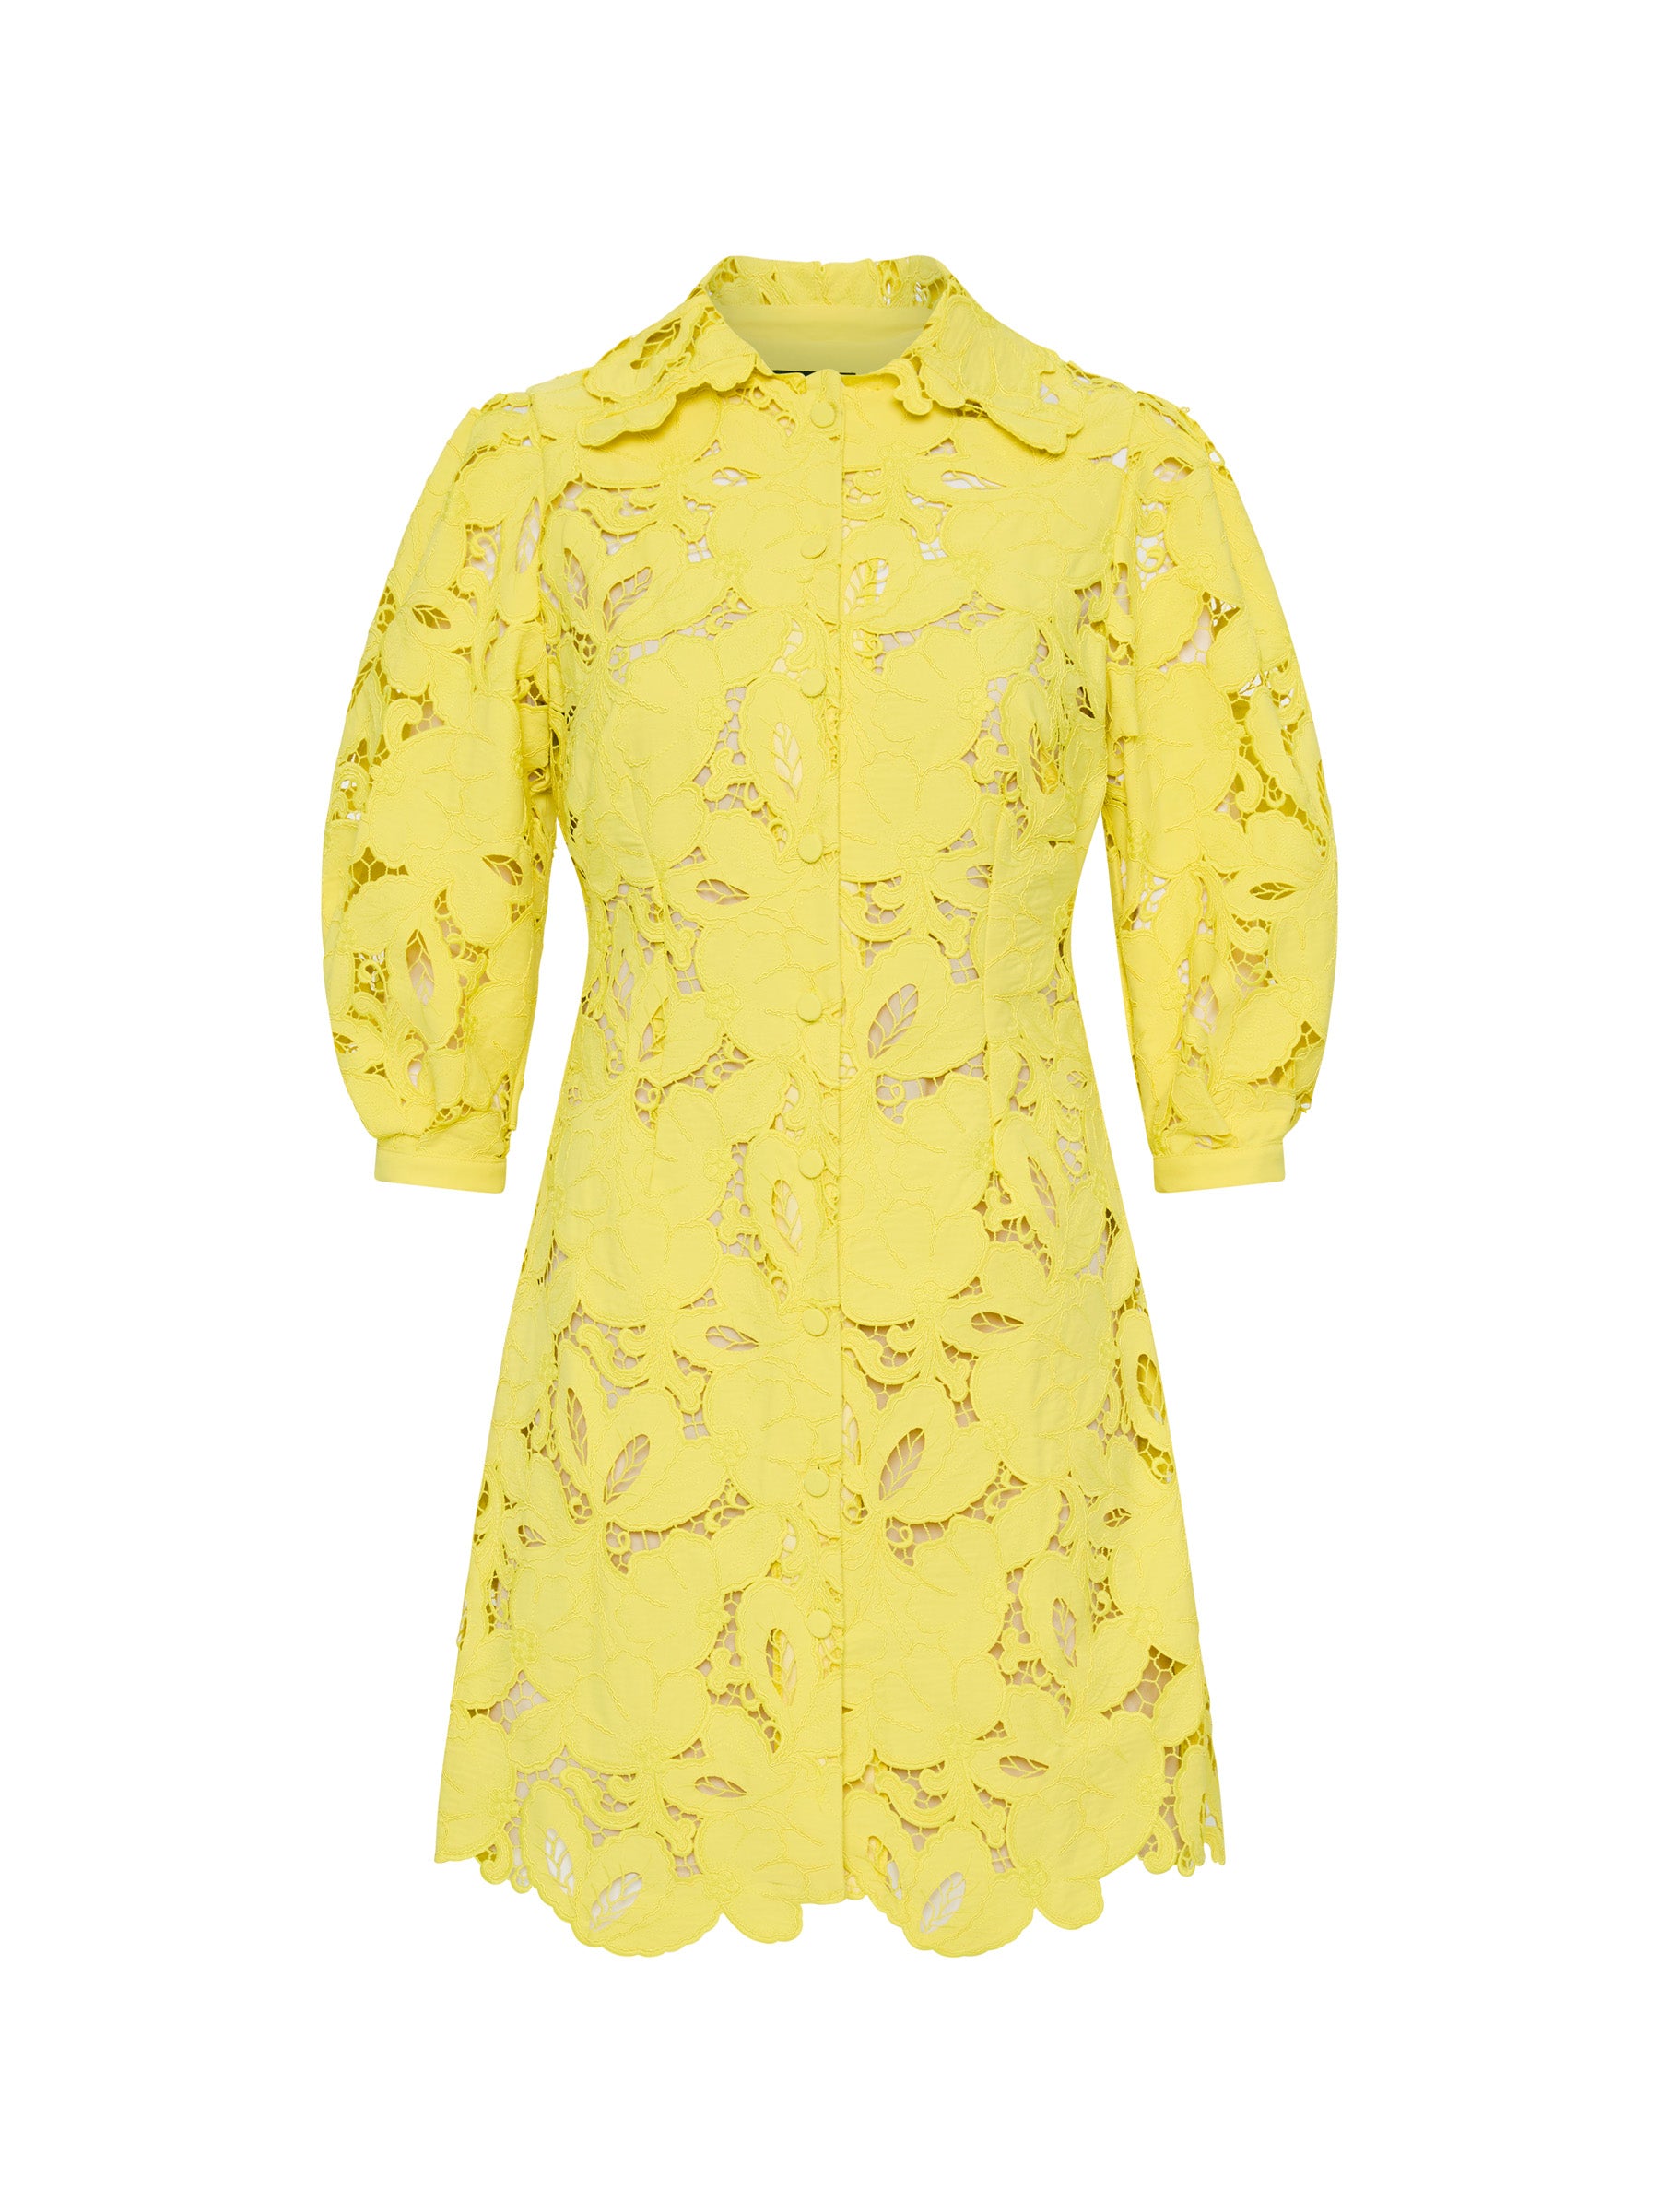 Monte Carlo Mini Shirt Dress - Yellow (Size 8 + 10 Only)